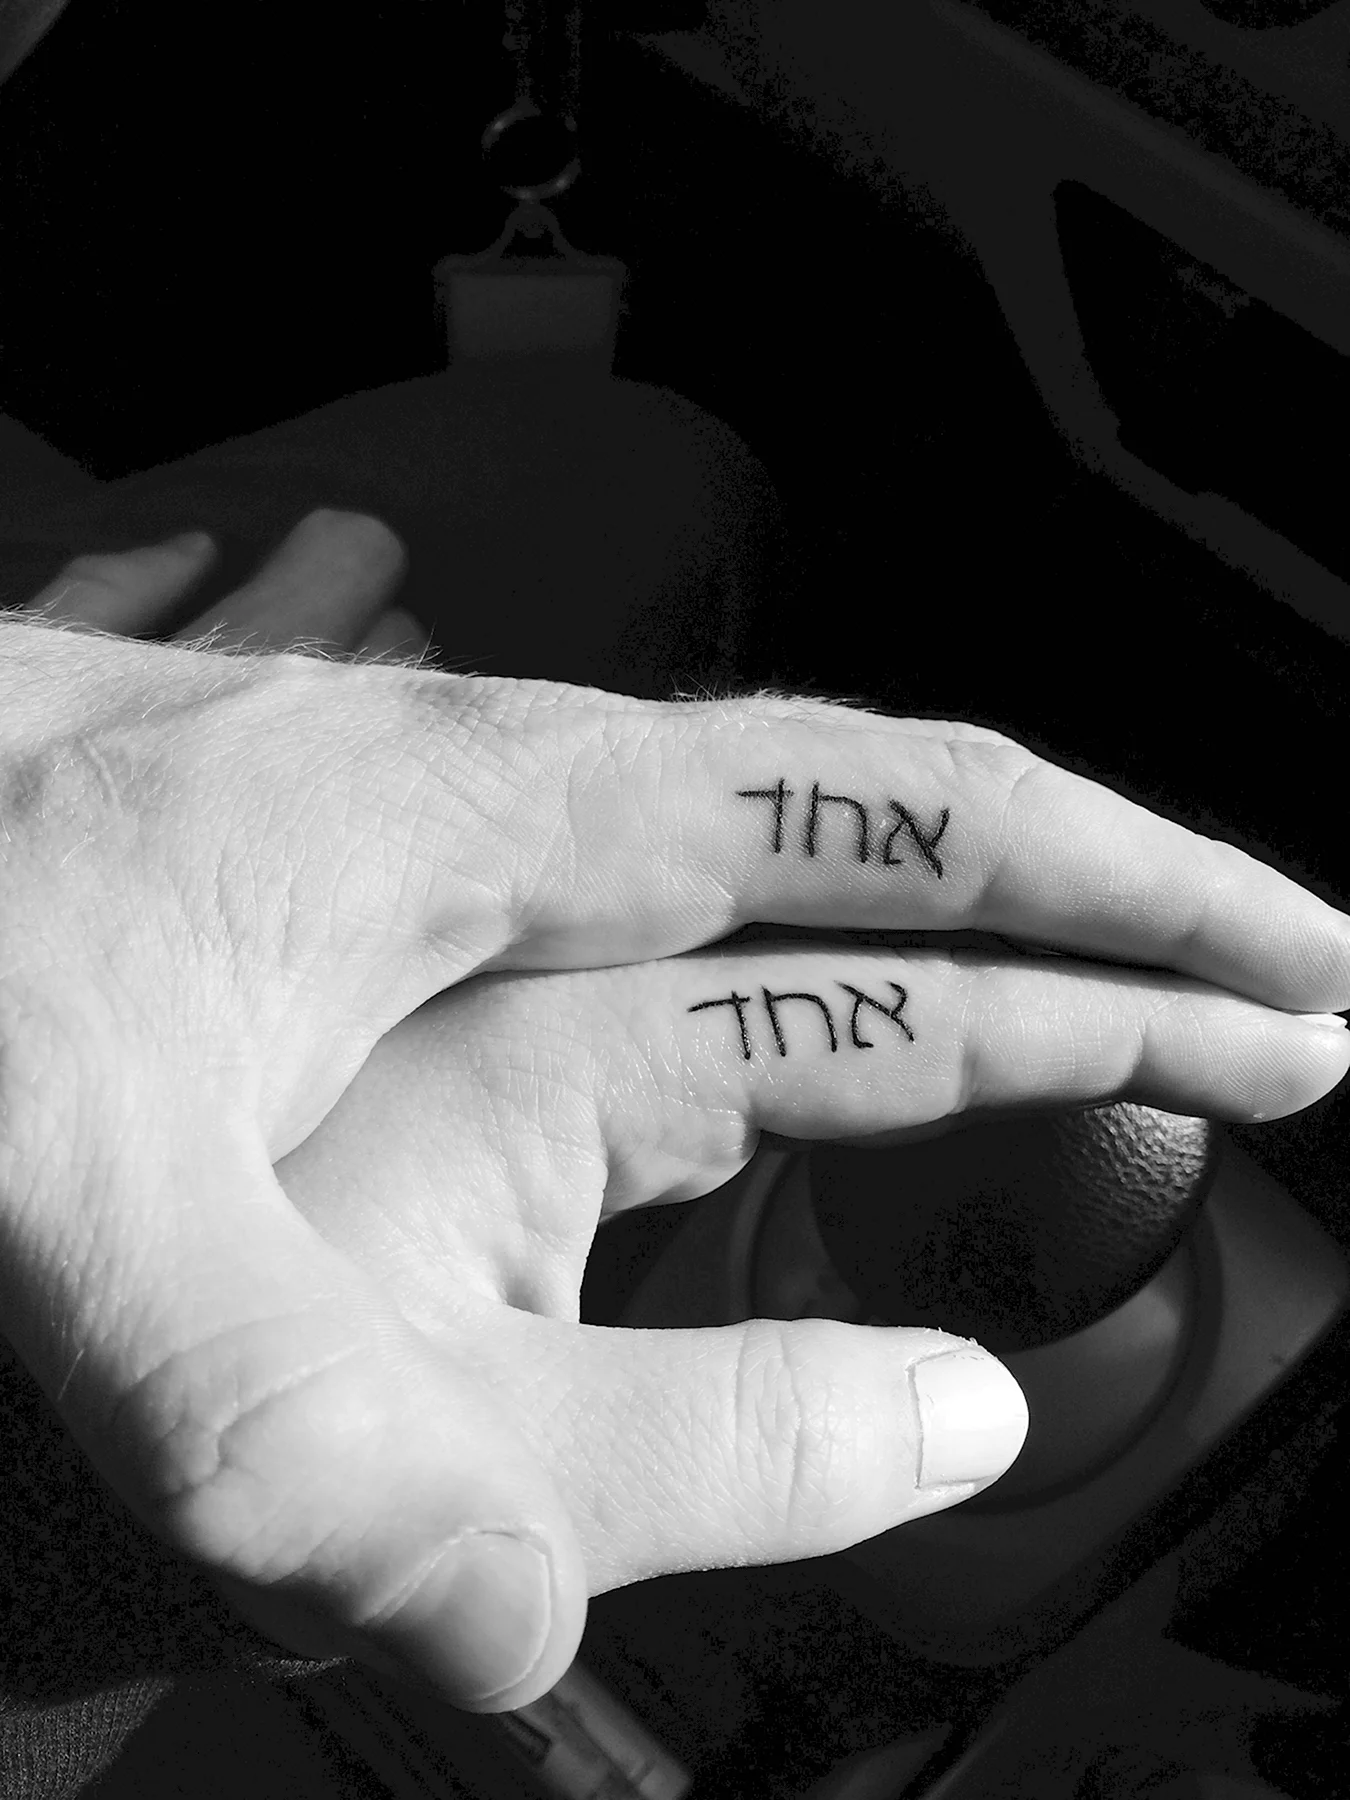 Надпись на иврите на пальце